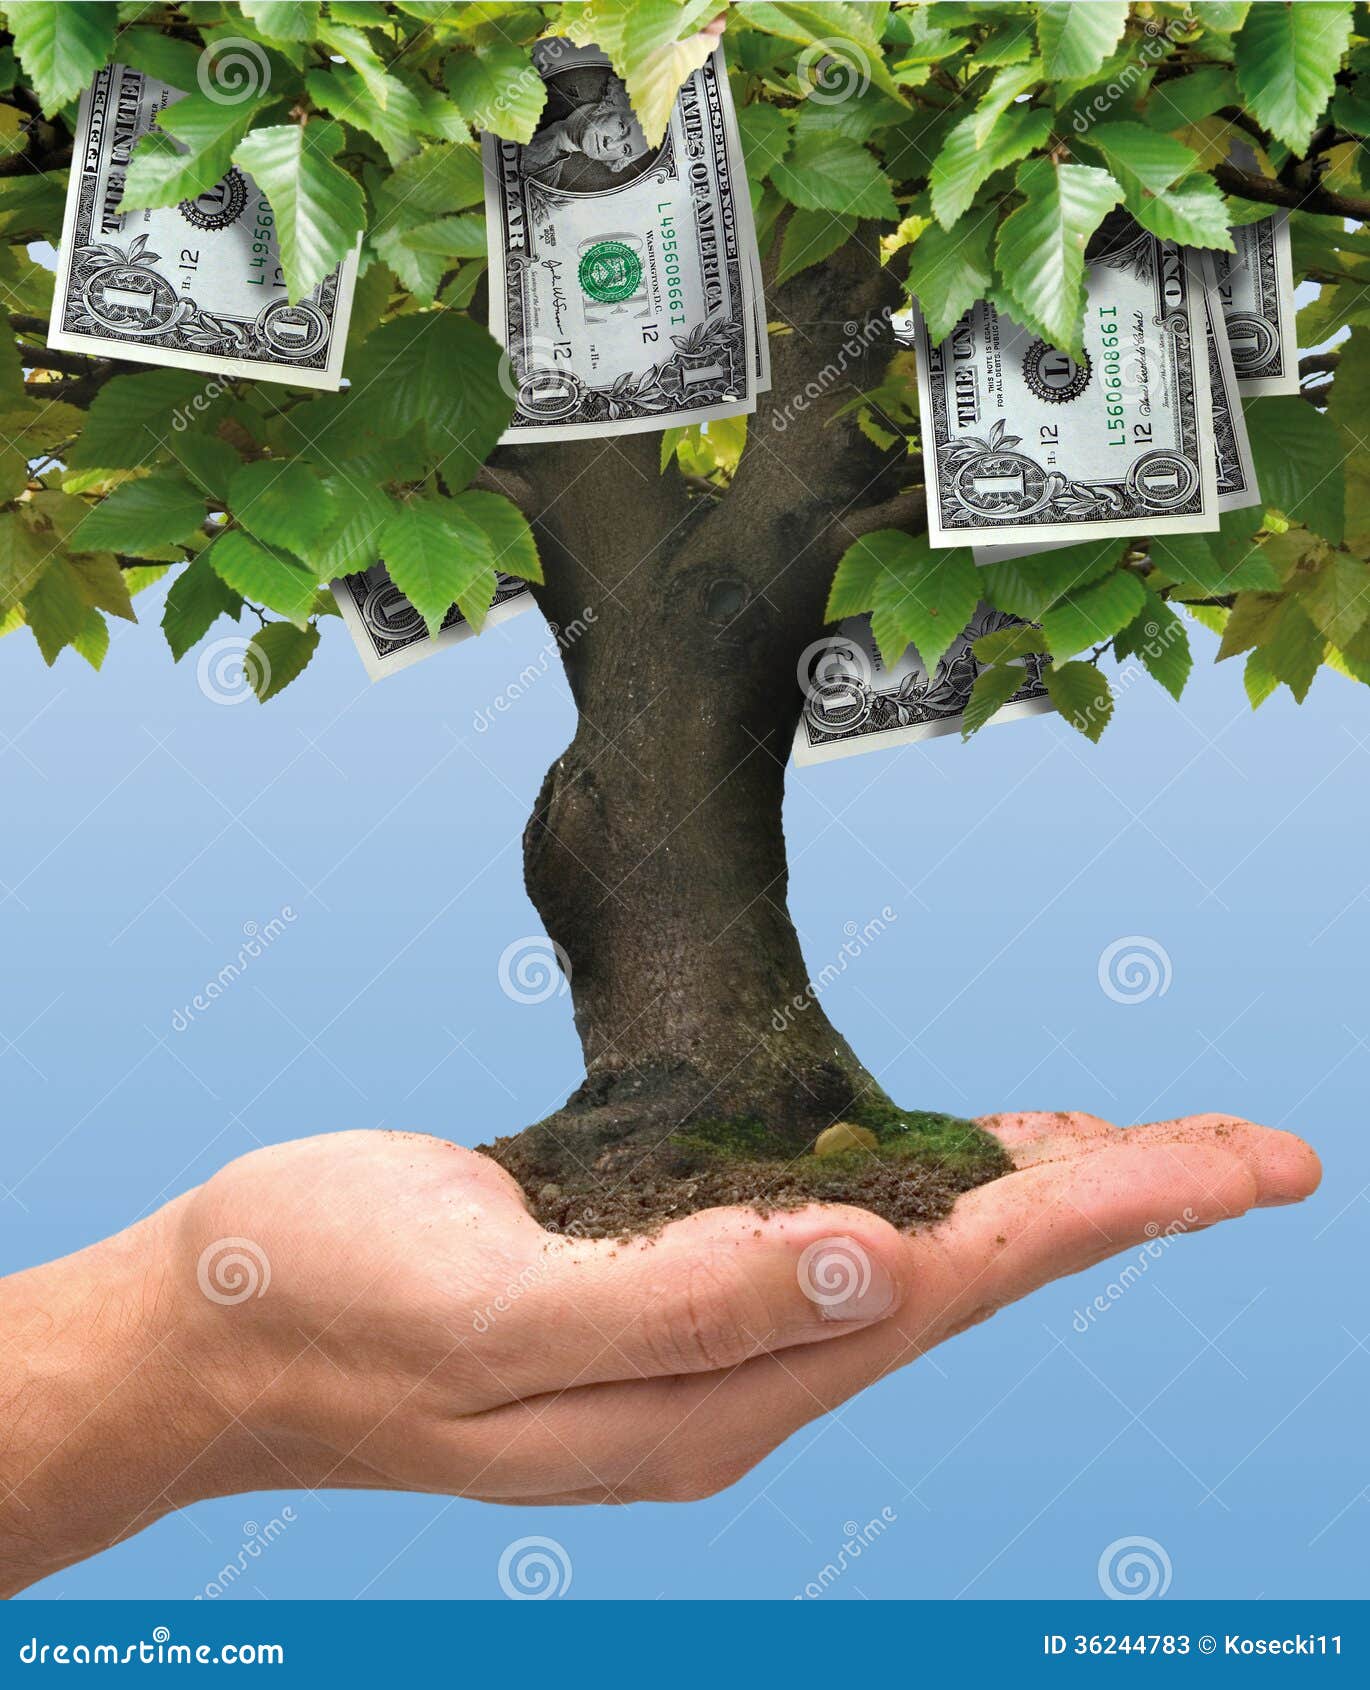 money tree - one dollar